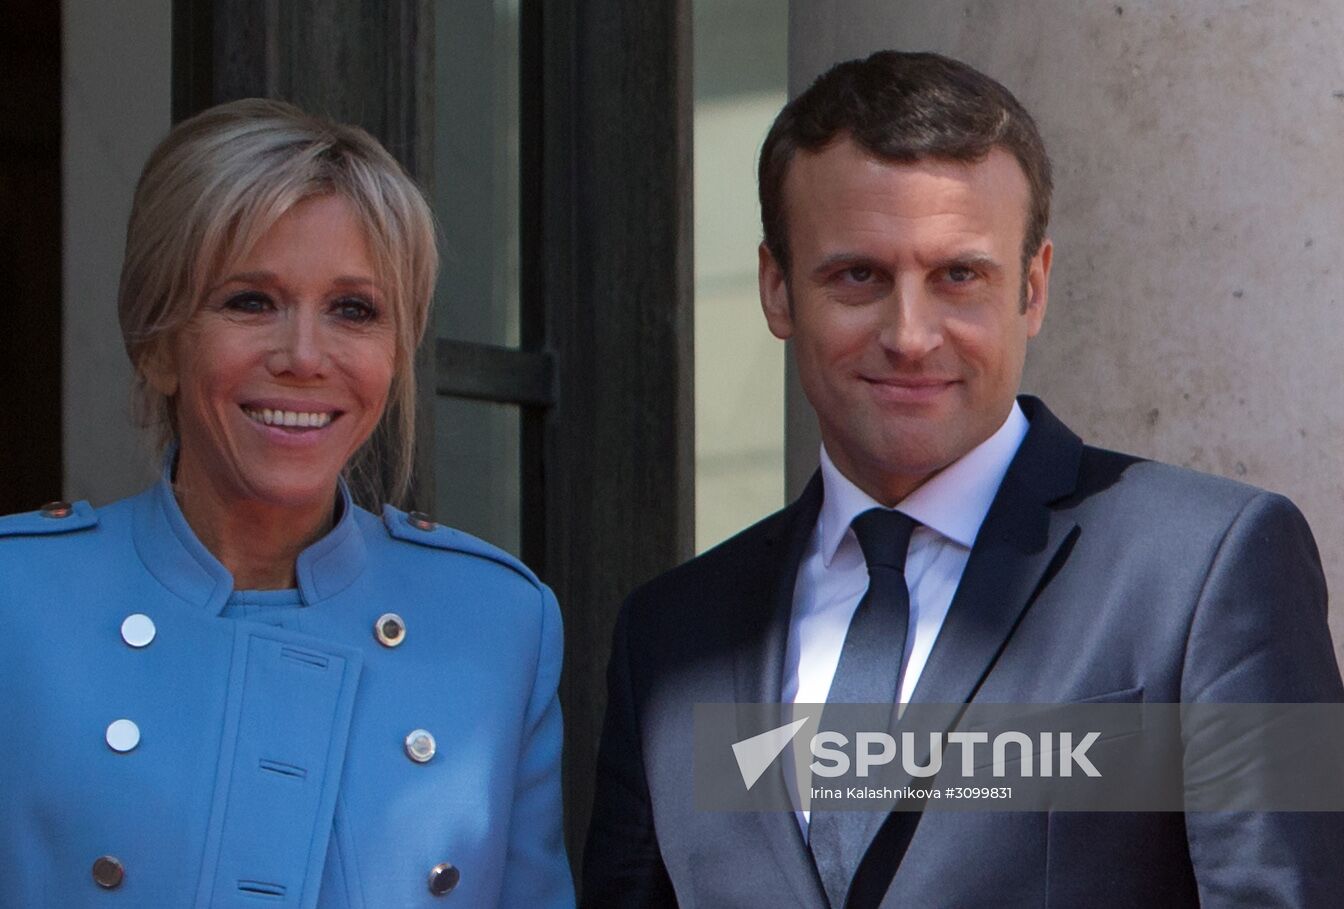 French President-Elect Emmanuel Macron being sworn in